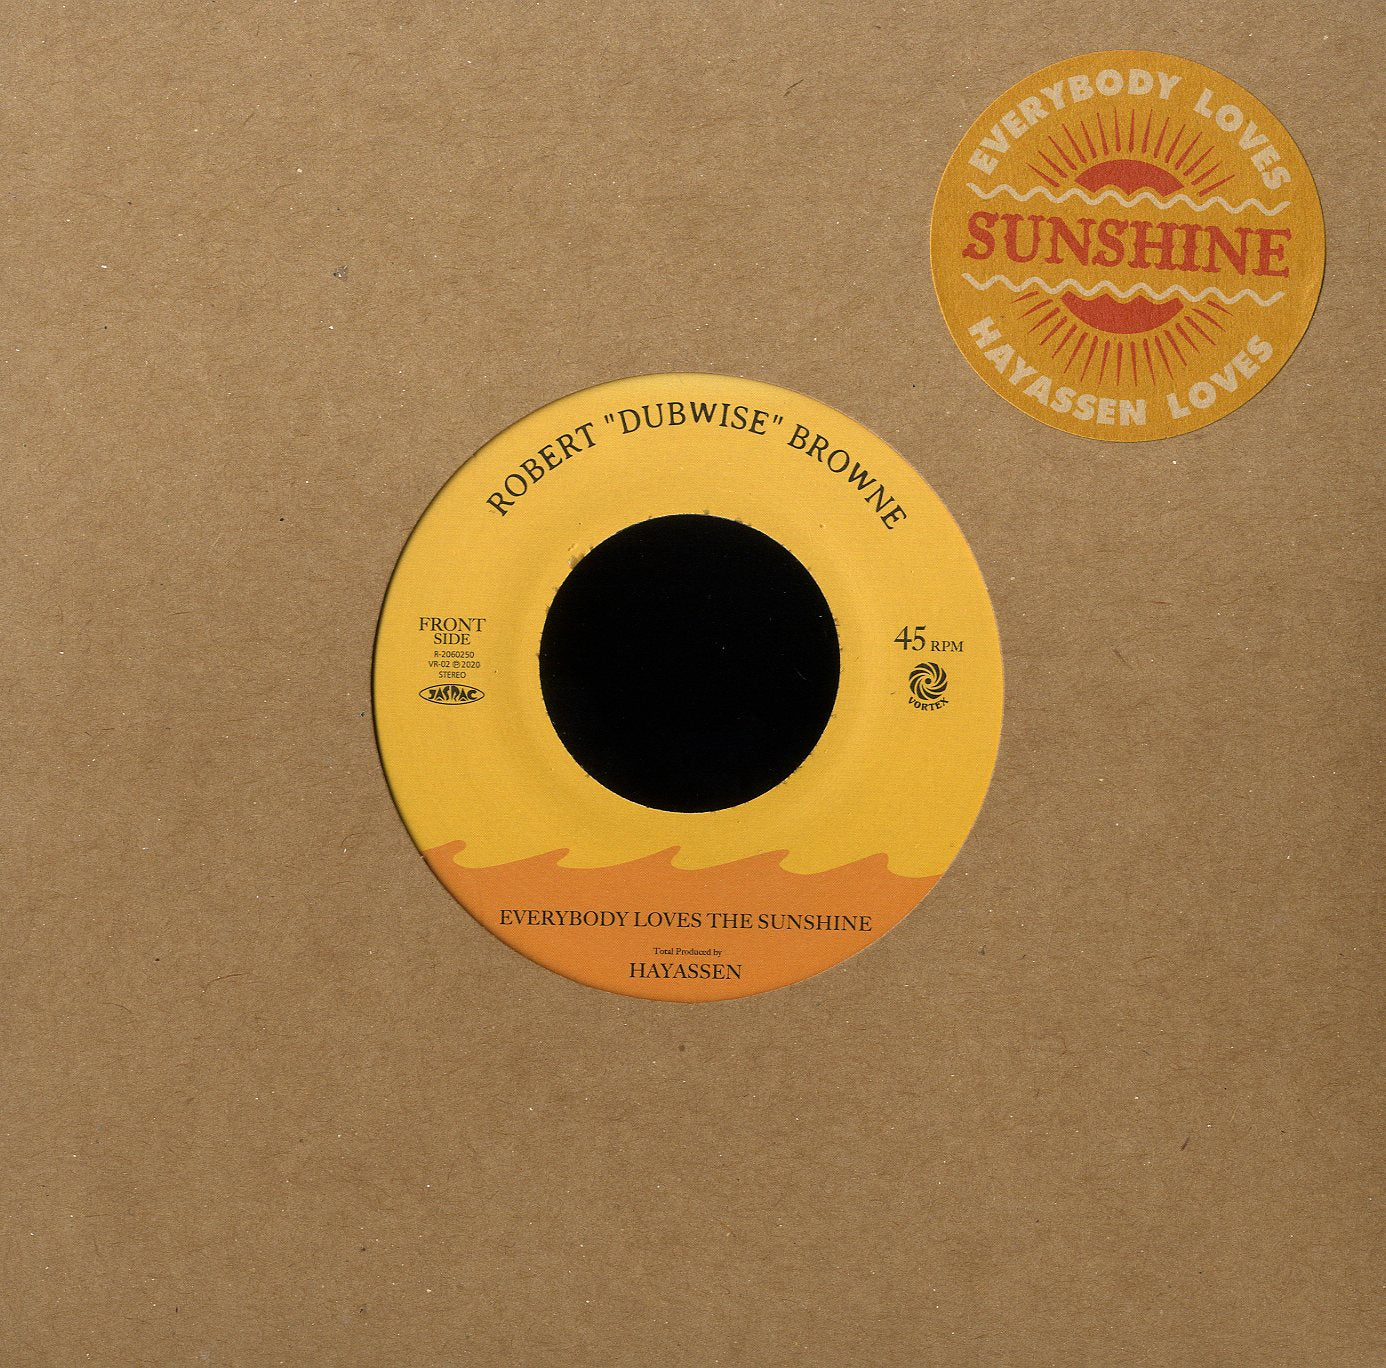 ROBERT “DUBWISE” BROWNE [Everybody Loves The Sunshine / Dub Version]